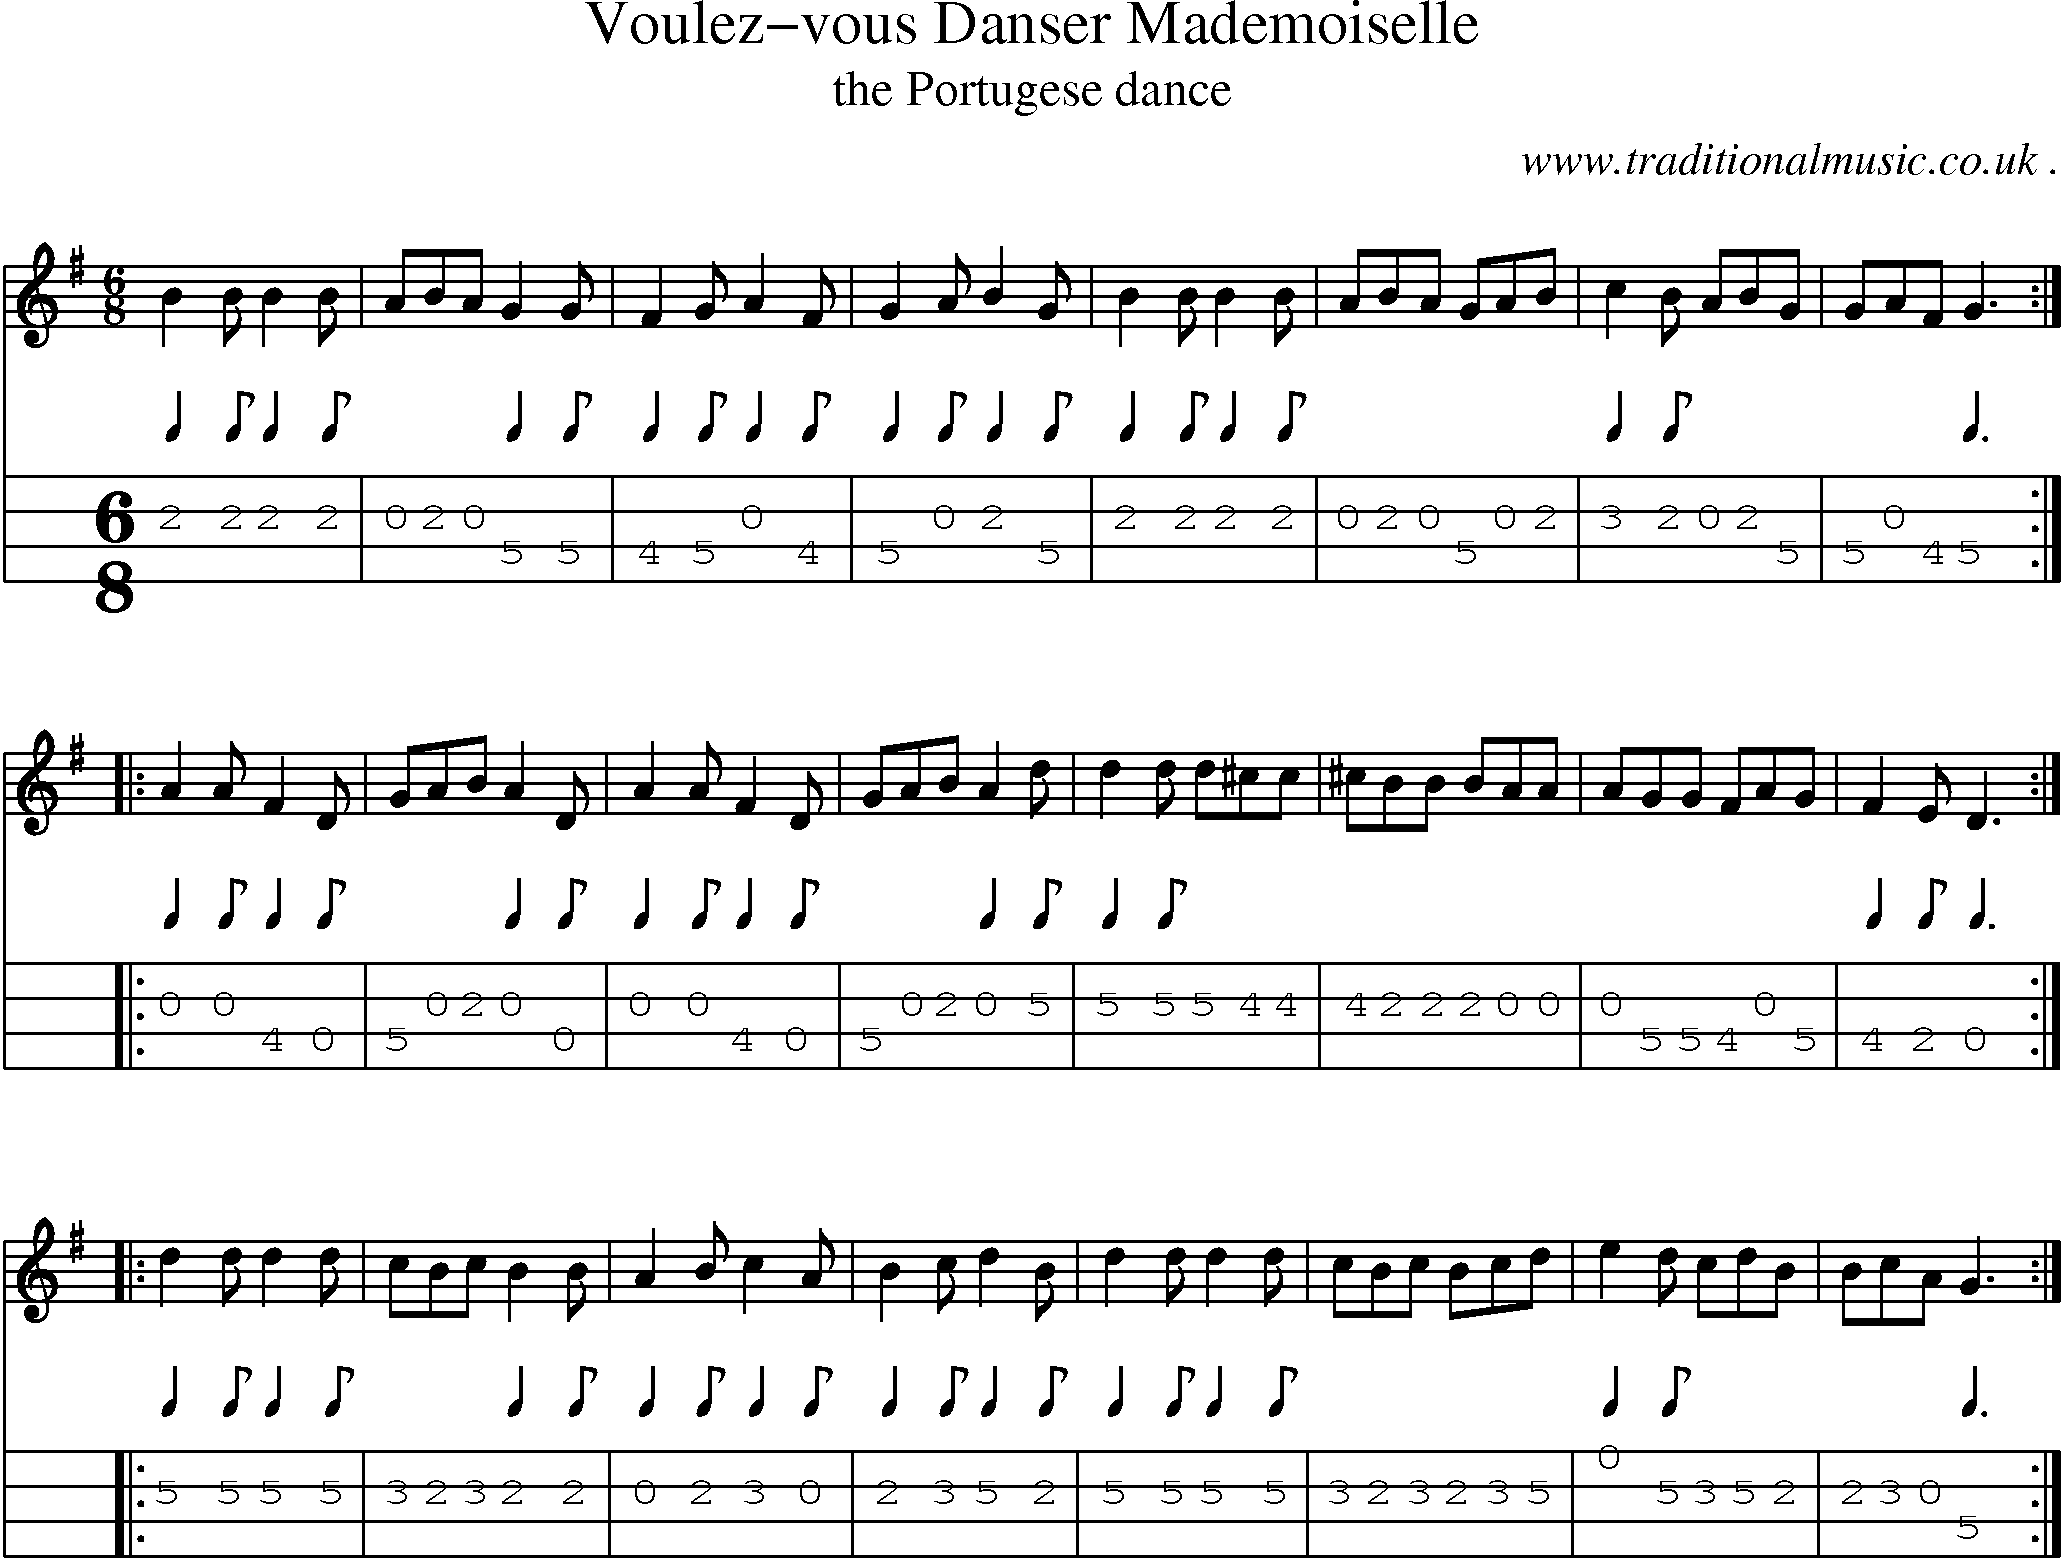 Sheet-Music and Mandolin Tabs for Voulez-vous Danser Mademoiselle